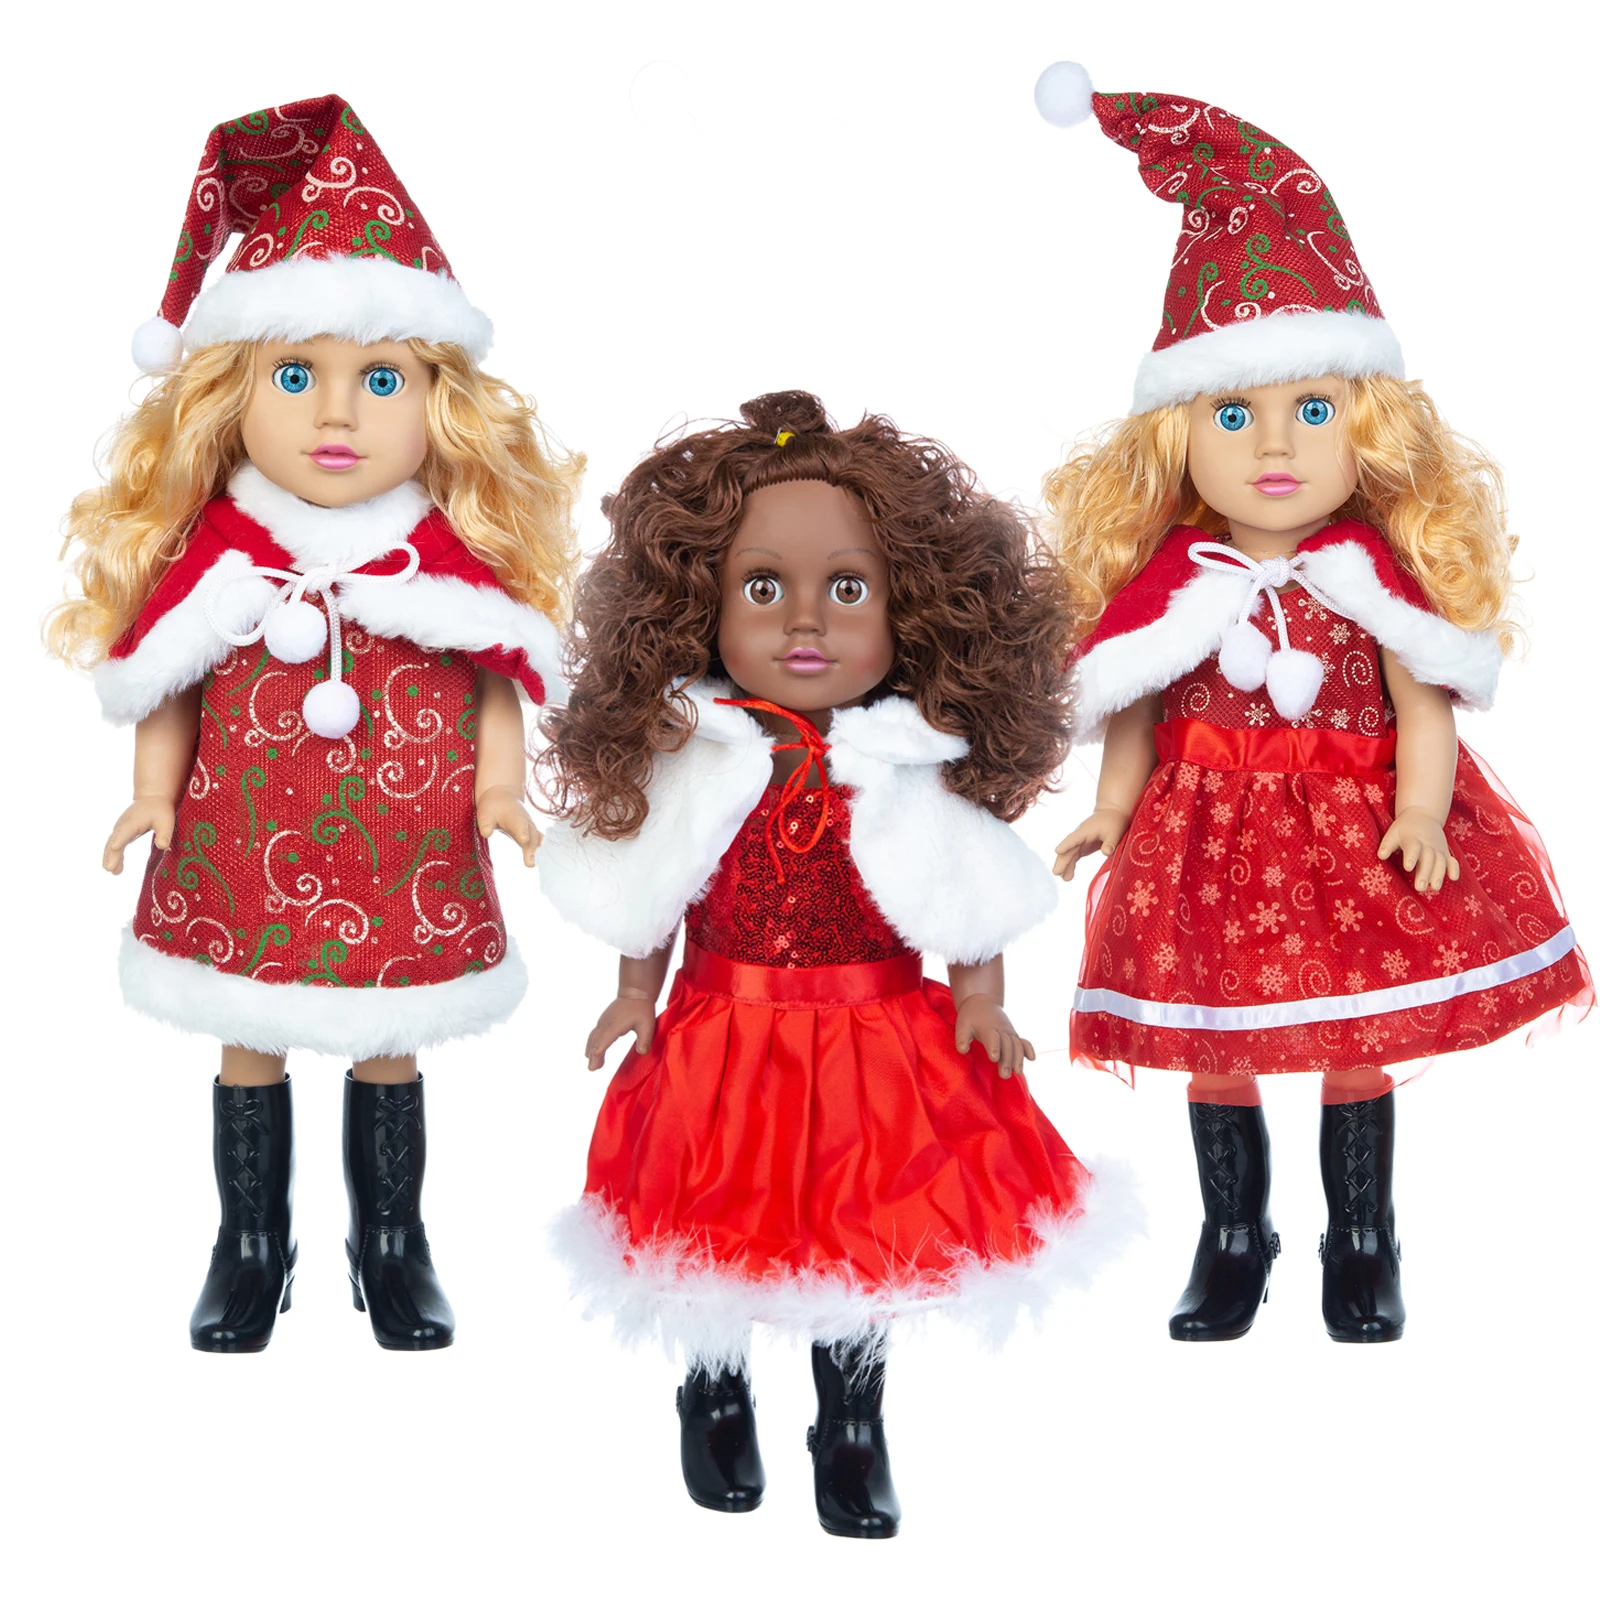 2020 New 19Inch Christmas Girl Doll Children Girls Toy Mini Cute Explosive hairstyle Doll Children Girls кварцевые часы aliexpress explosive dz 2020 доступны в большом количестве для мужского повседневного стиля 7332 ремень